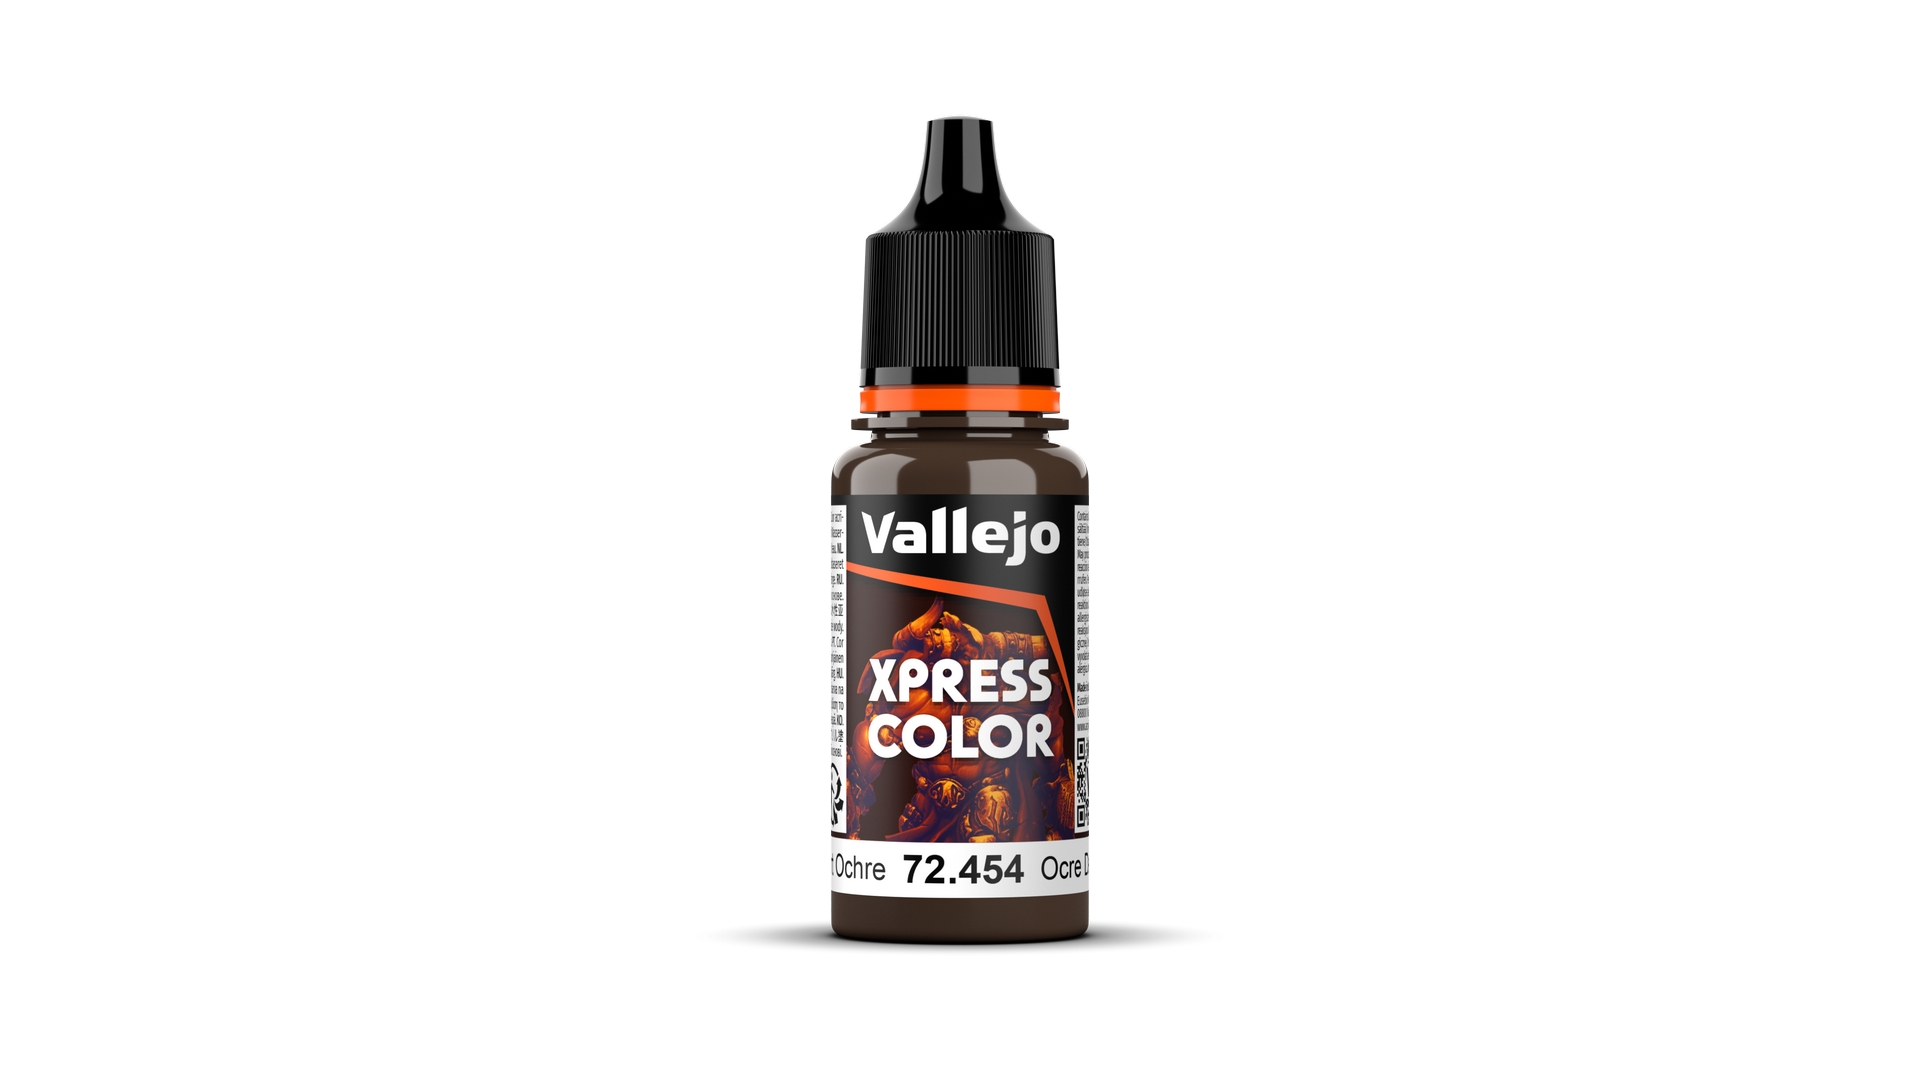 Xpress Color Wüsten-Ocker / Desert Ochre, 18 ml